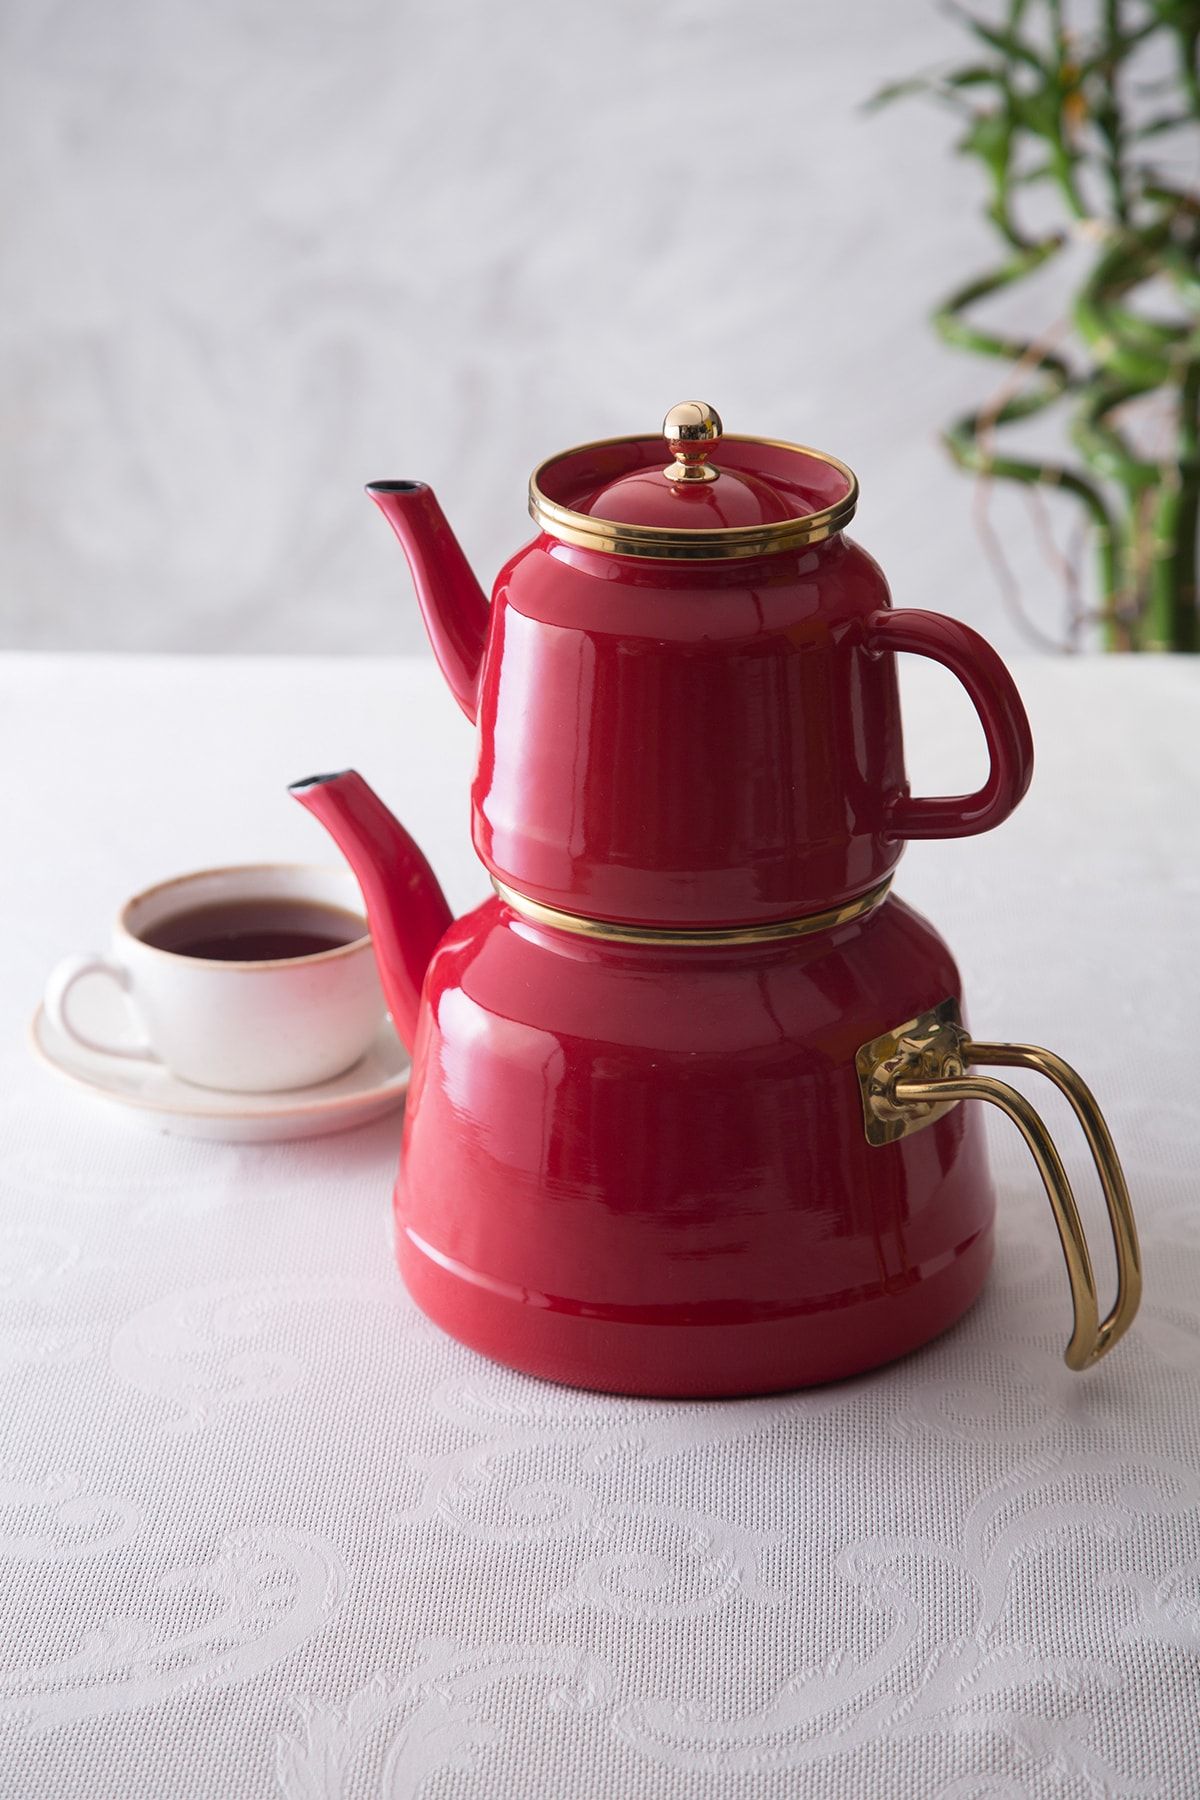 Emsan Lina Midi Çaydanlık Takımı Inox Fiyatı, Yorumları - Trendyol